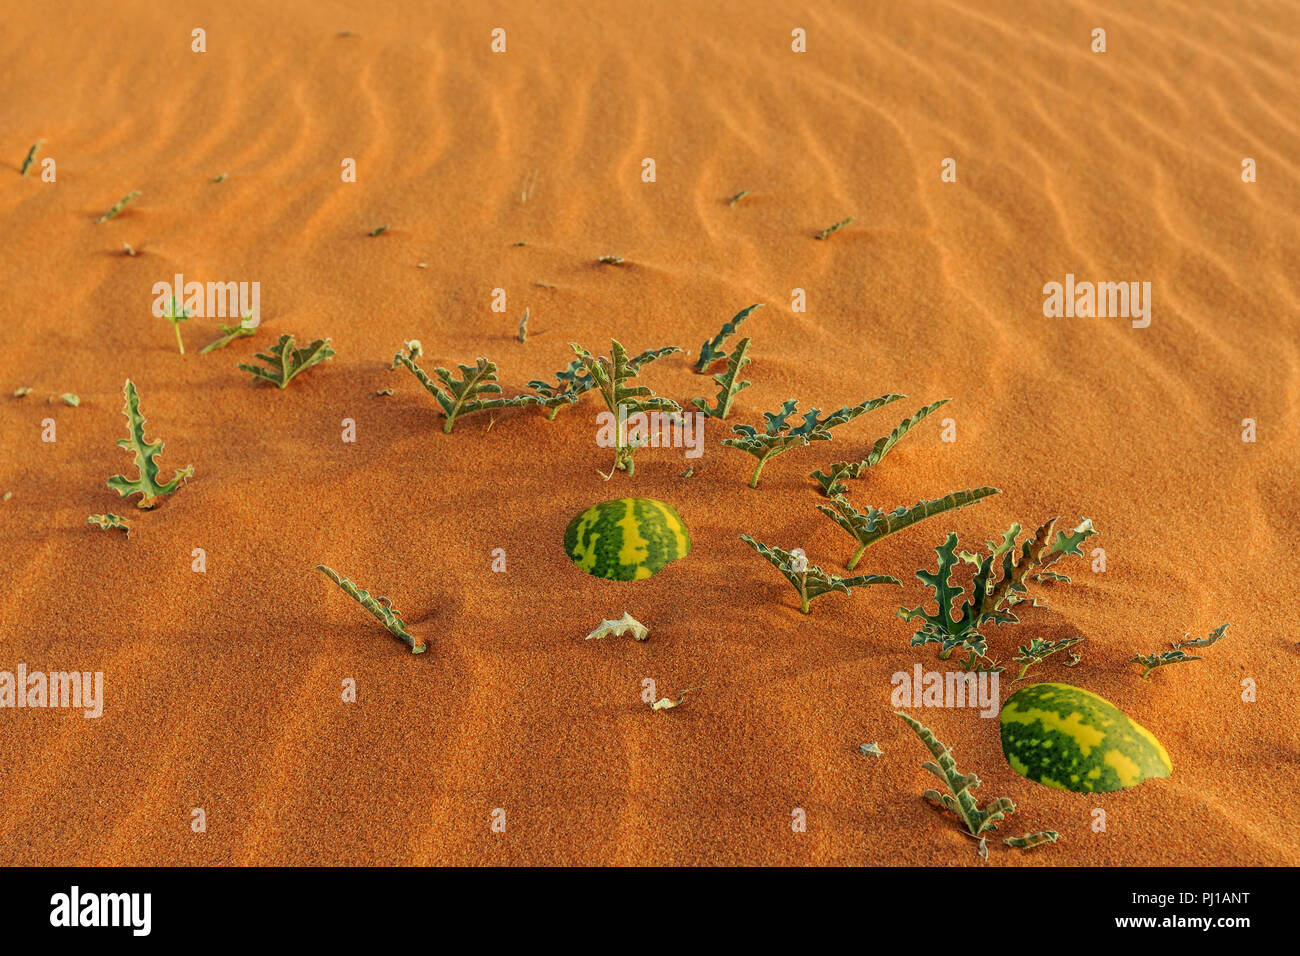 Two watermelons buried in the desert, Saudi Arabia Stock Photo